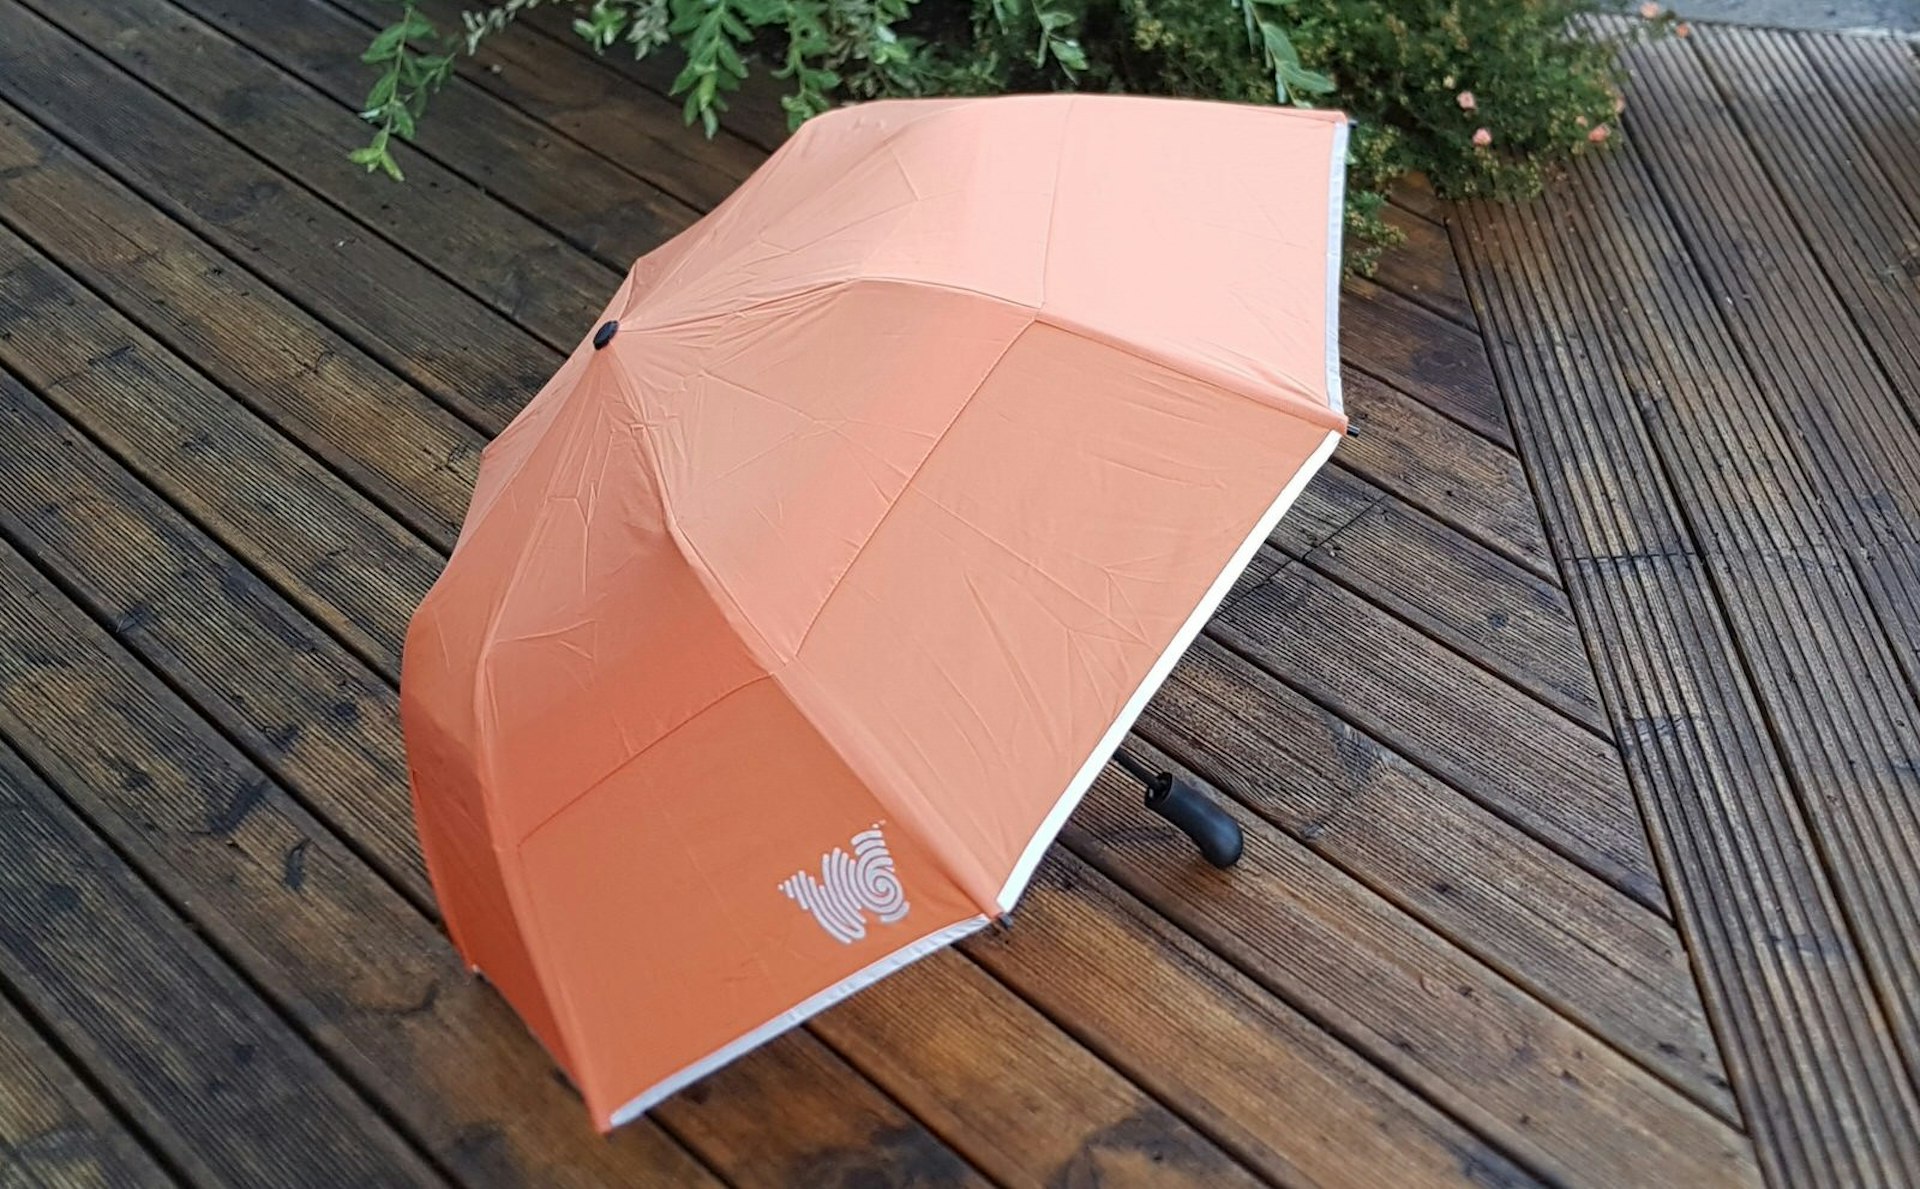 Weatherman Collapsible Umbrella